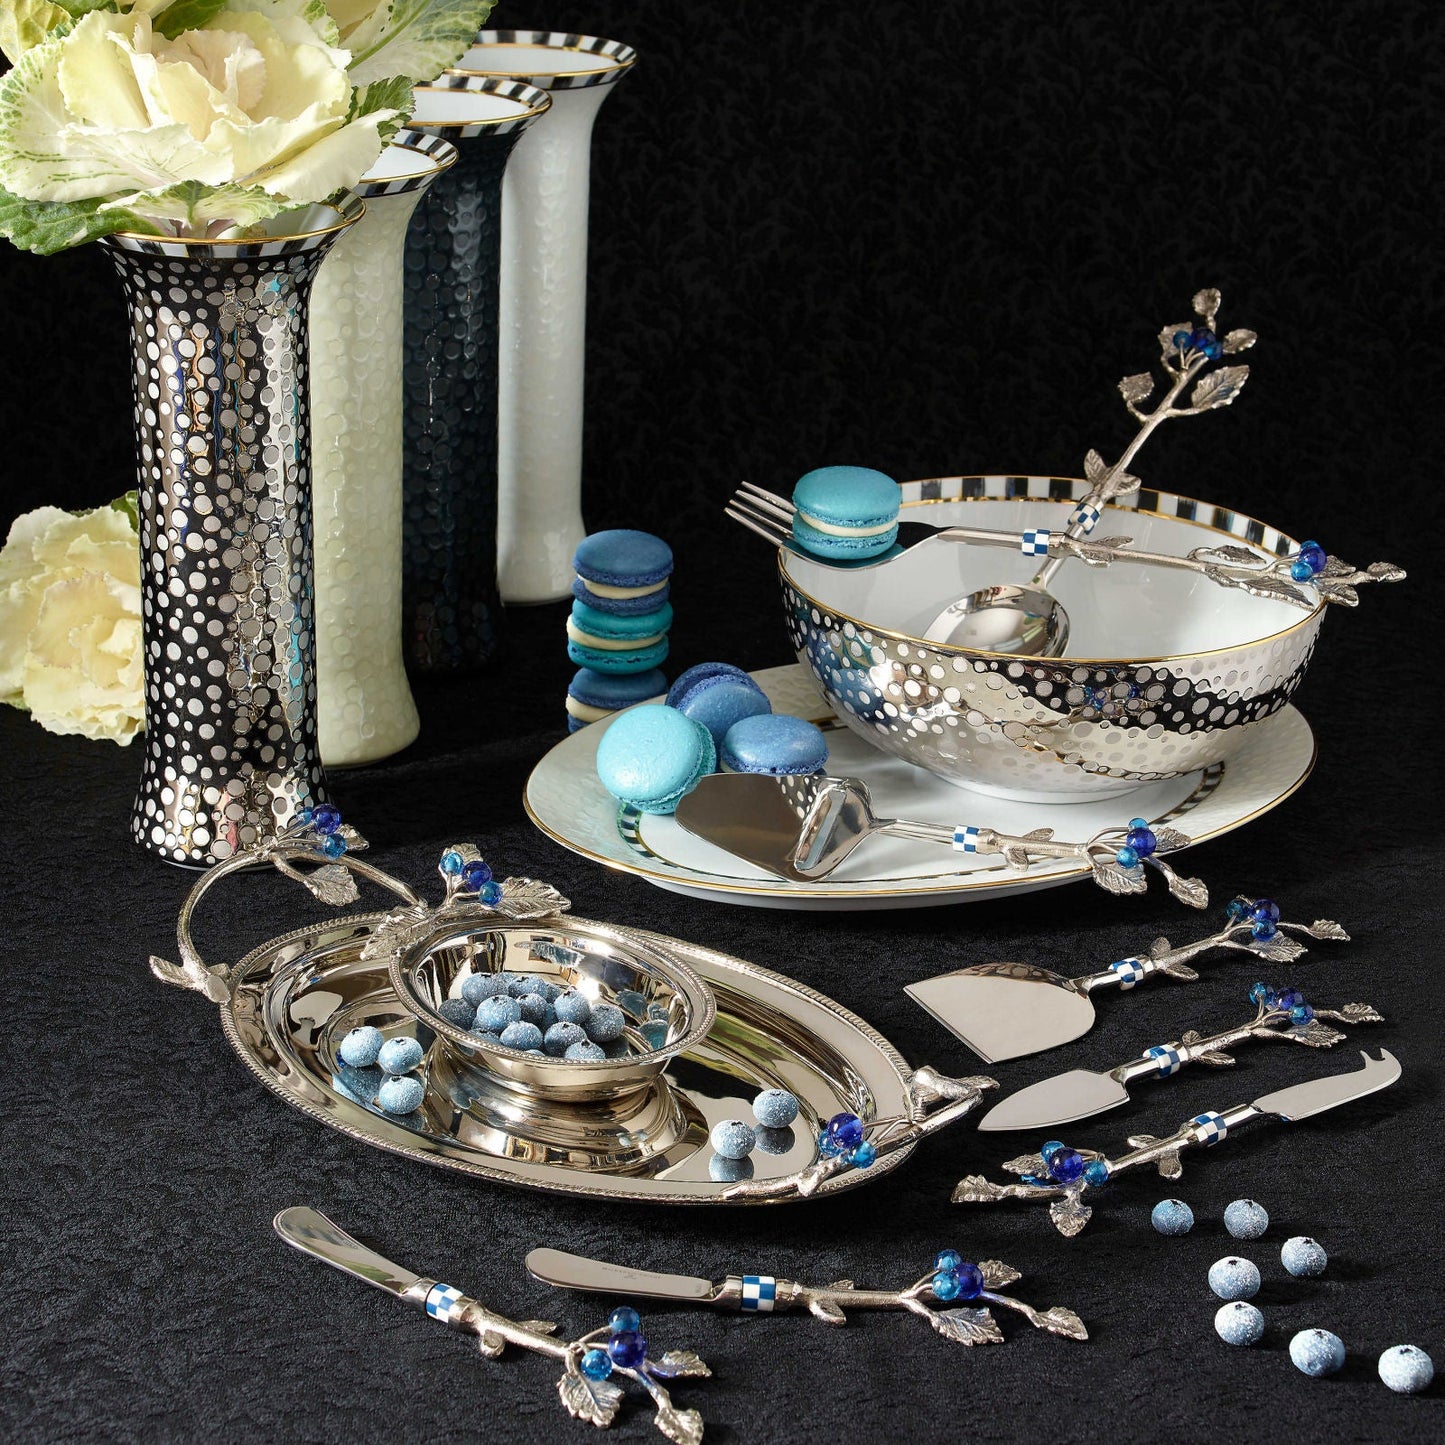 Luxury SoHo Vase - Platinum - |VESIMI Design| Luxury and Rustic bathrooms online